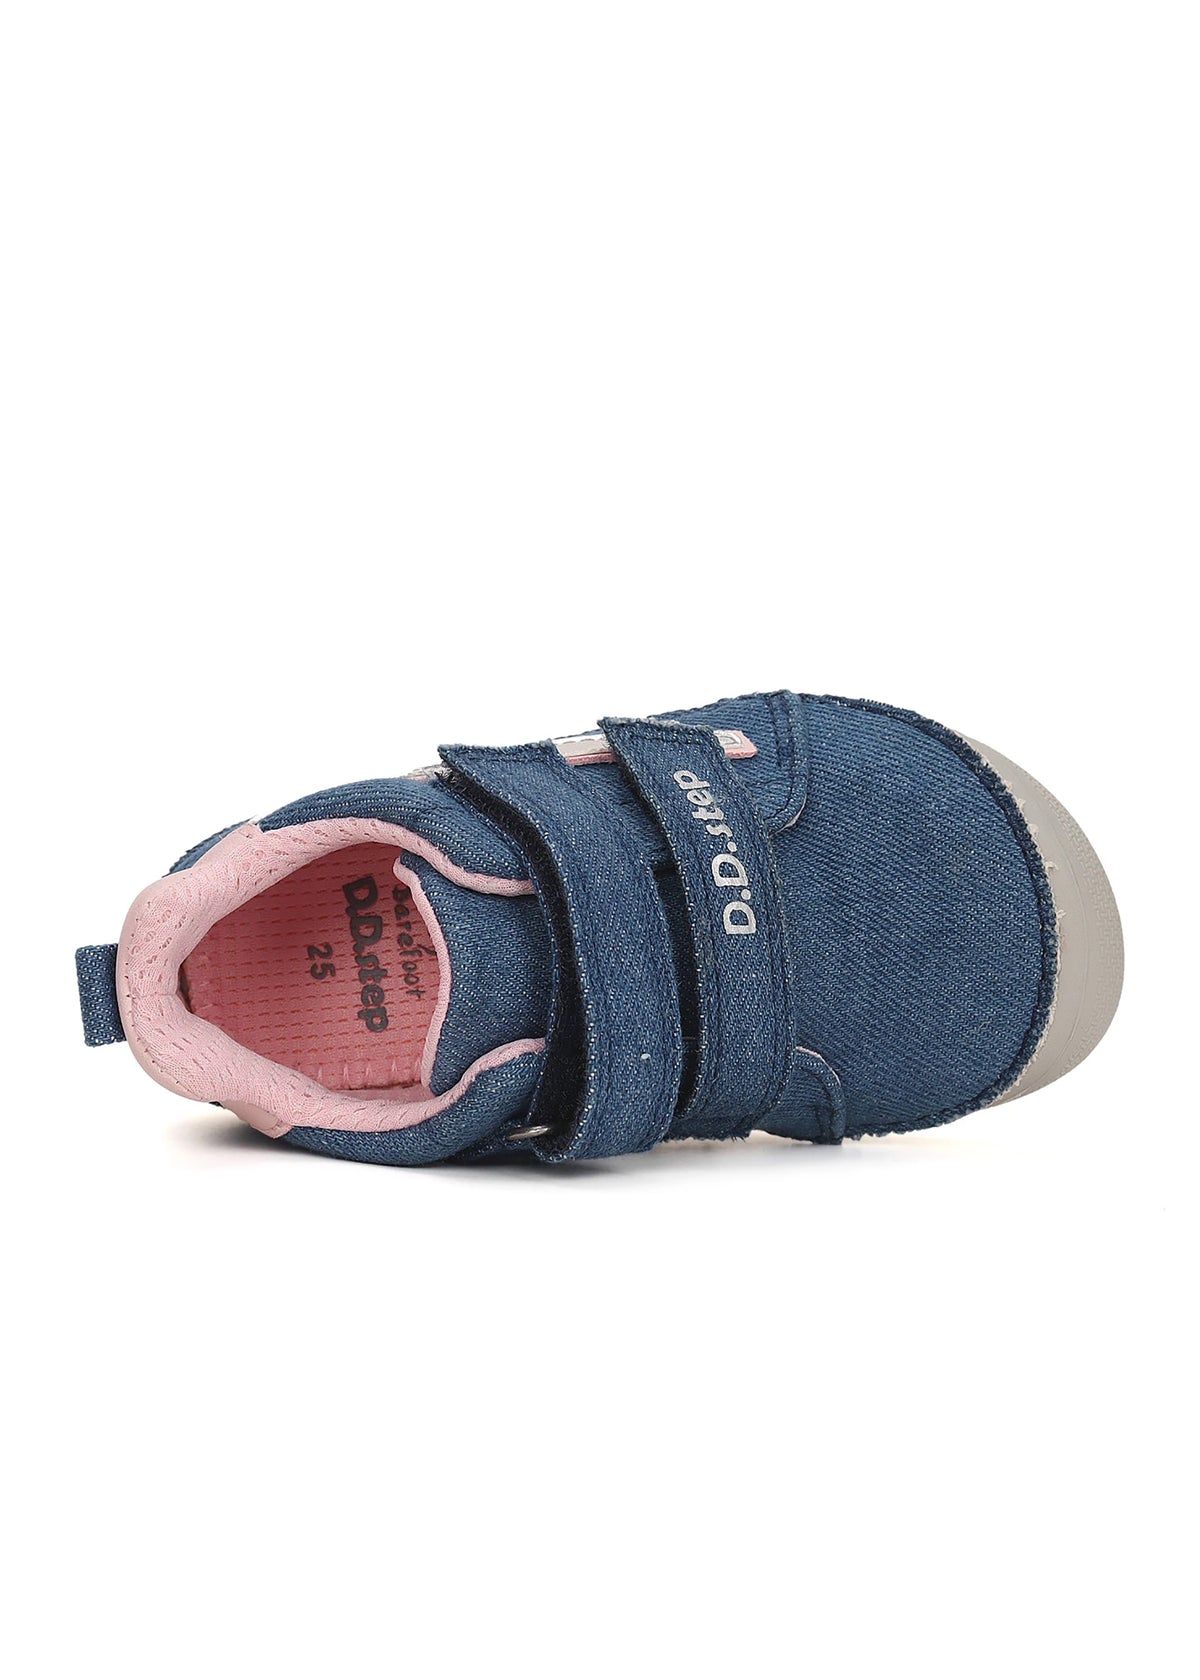 Children's barefoot sneakers - Denim blue canvas, pink-silver flash